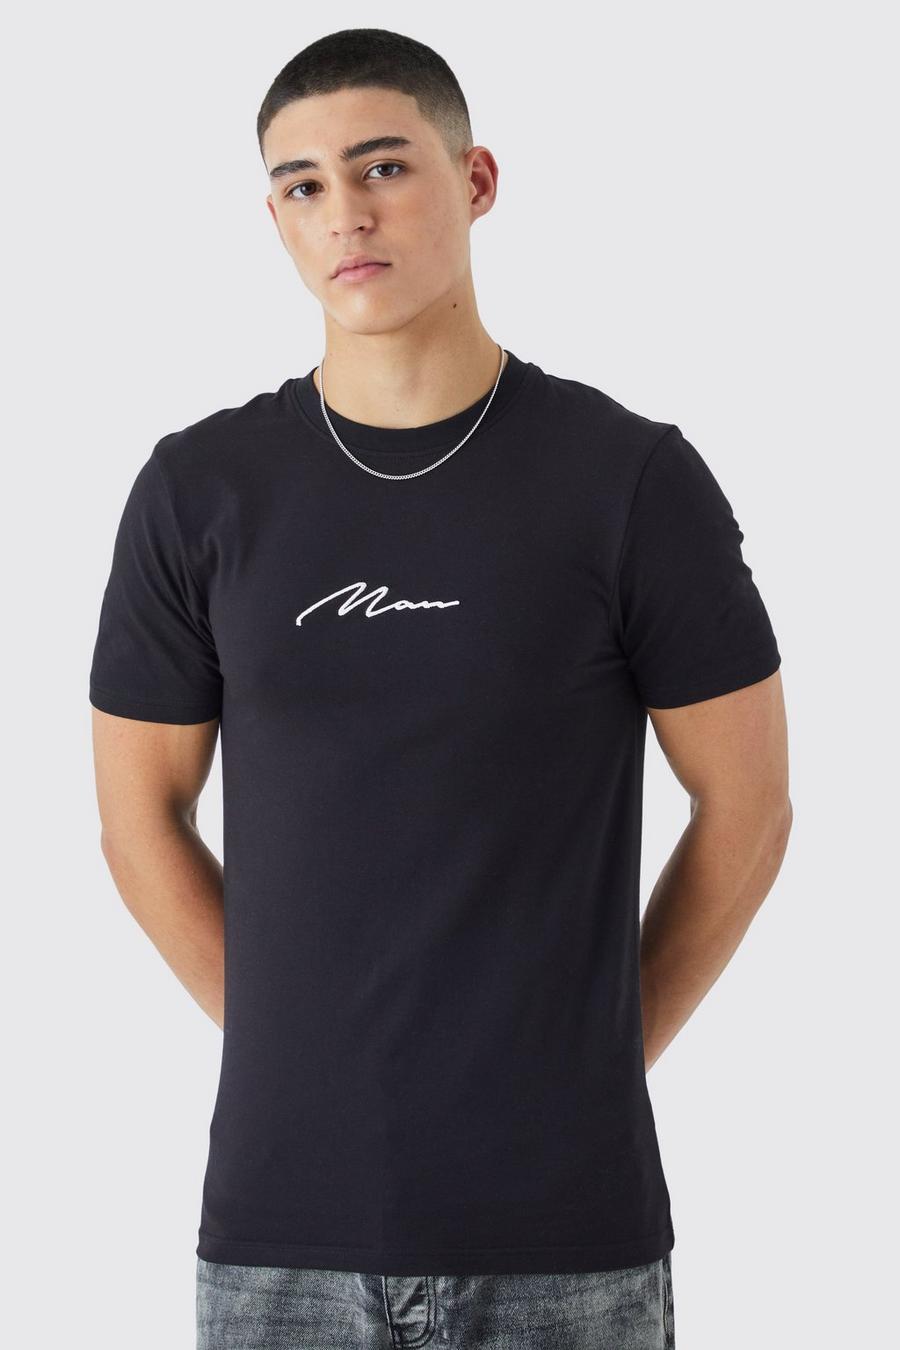 Camiseta con firma MAN ajustada al músculo, Black image number 1